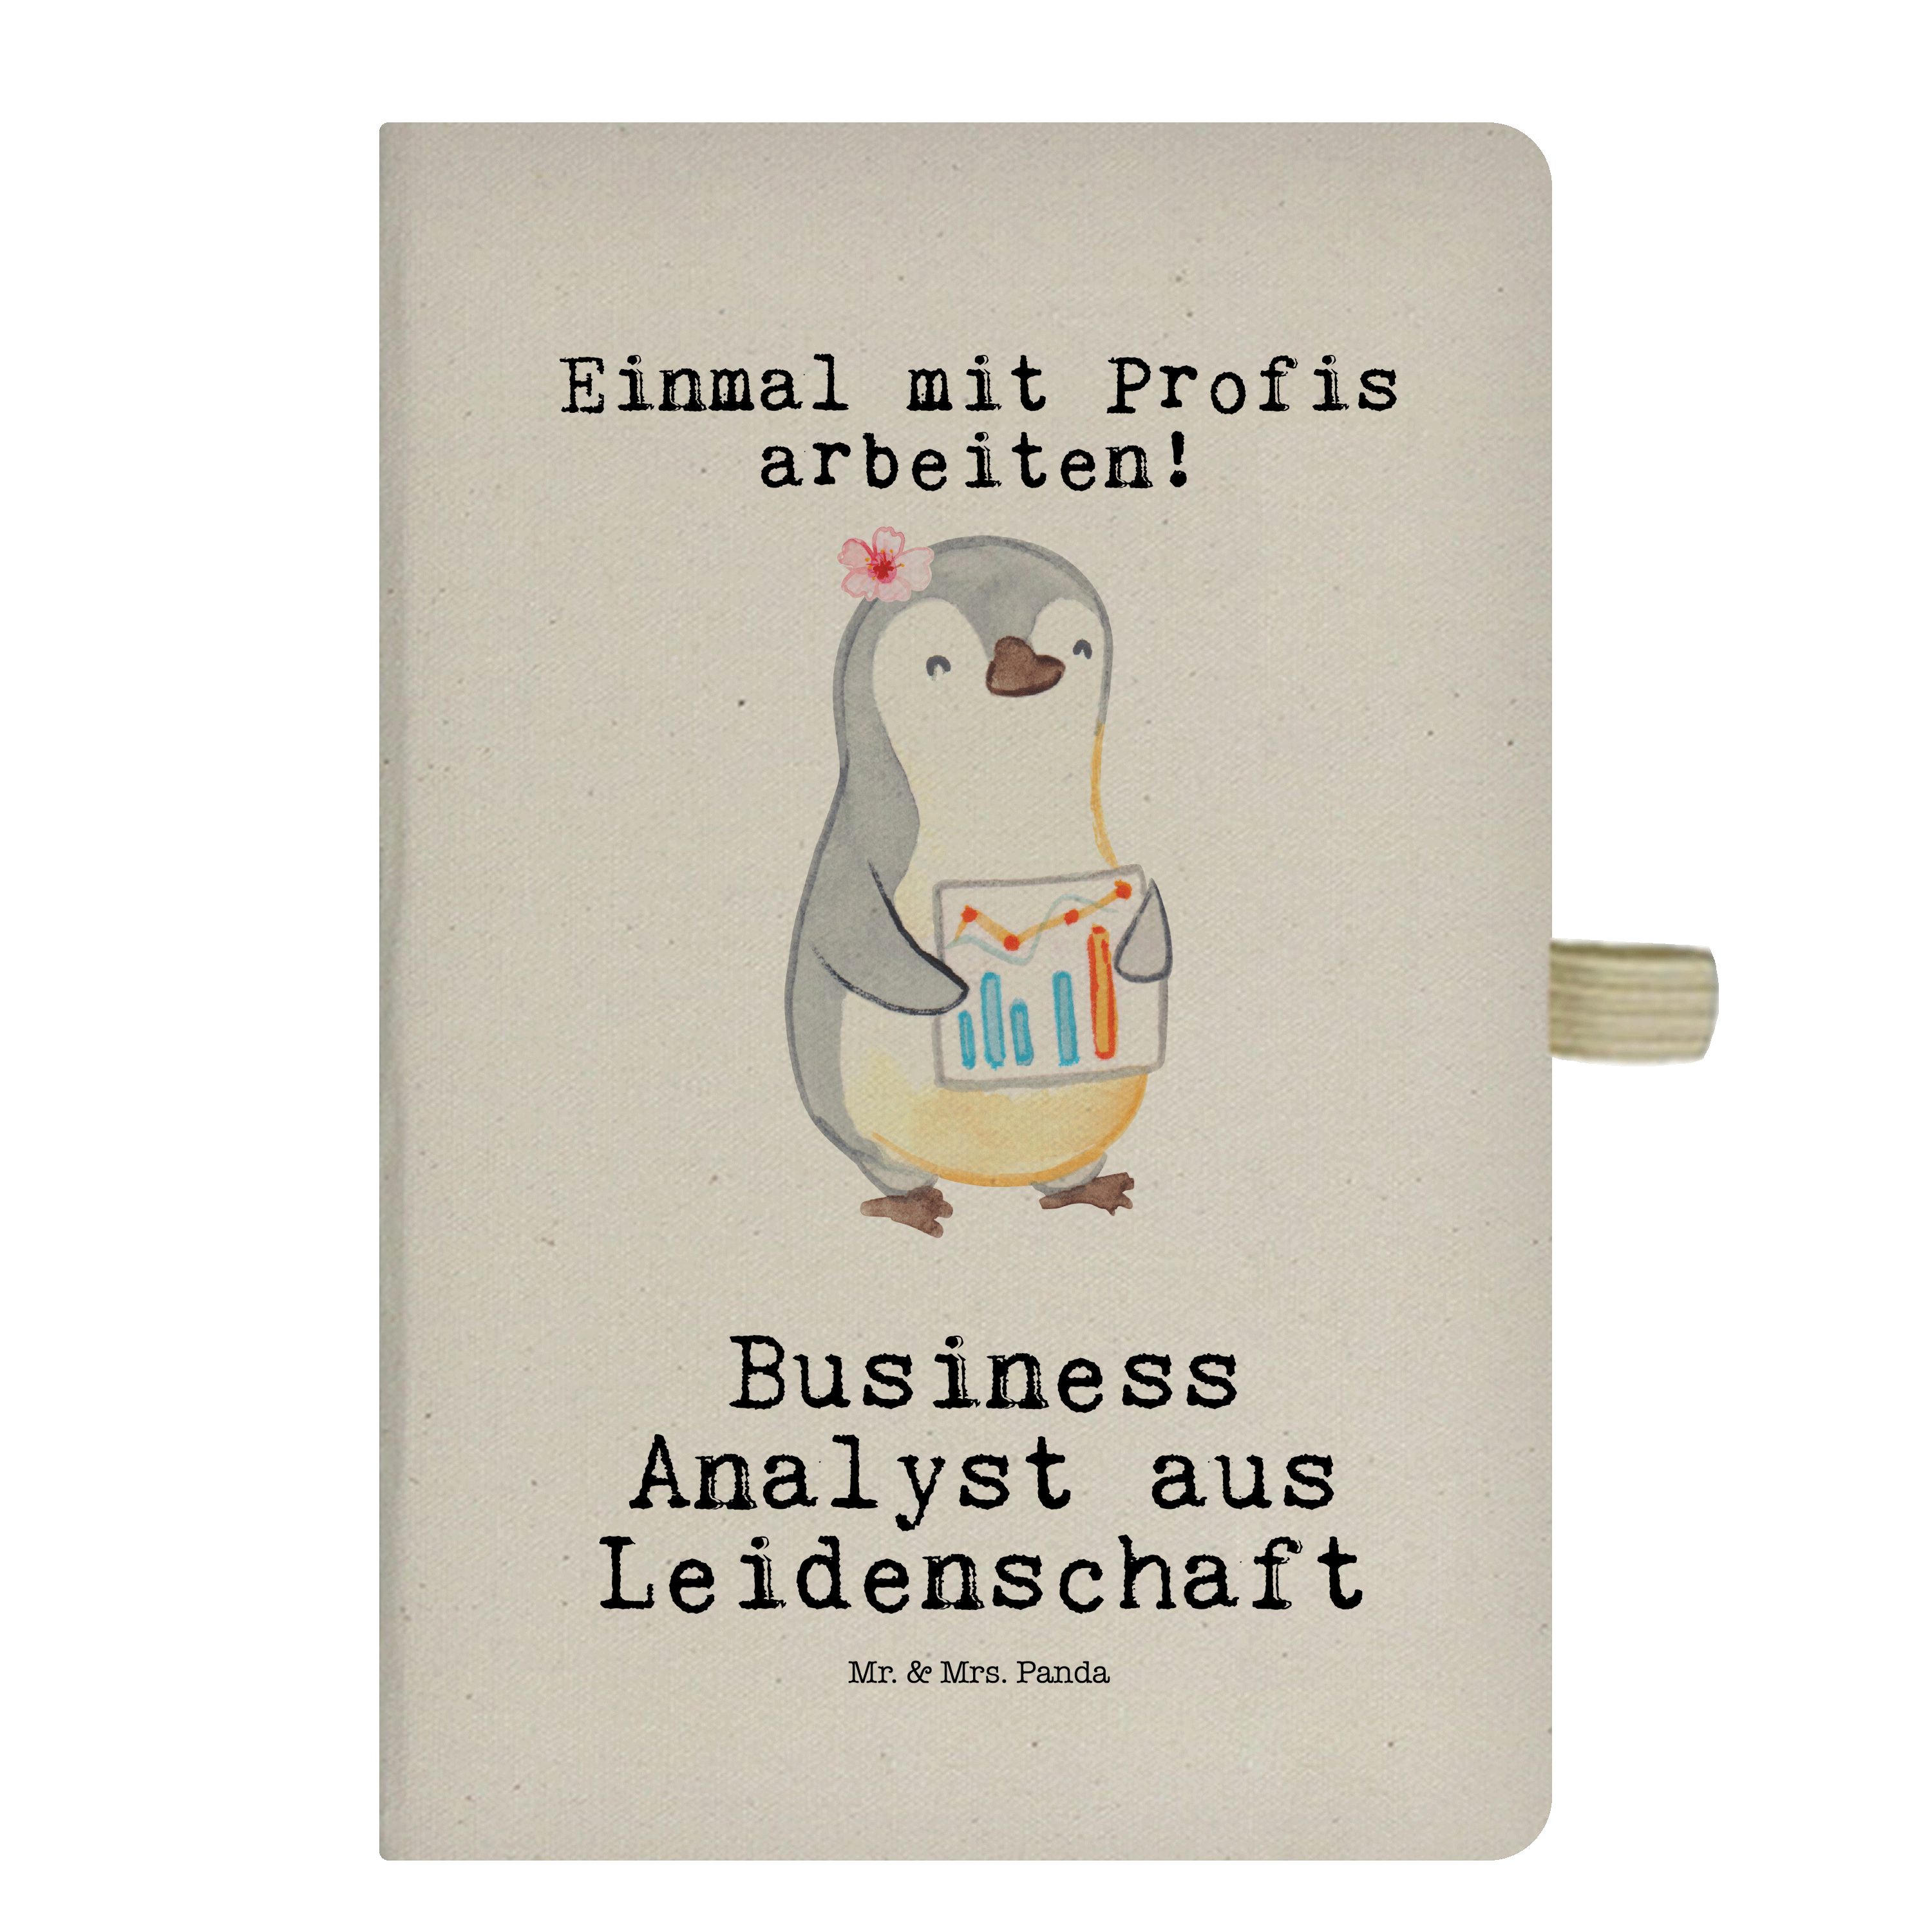 Mr. & Mrs. & - - Mrs. Transparent Mr. Notizen, Panda aus Geschenk, Analyst Business Panda Notizbuch Leidenschaft